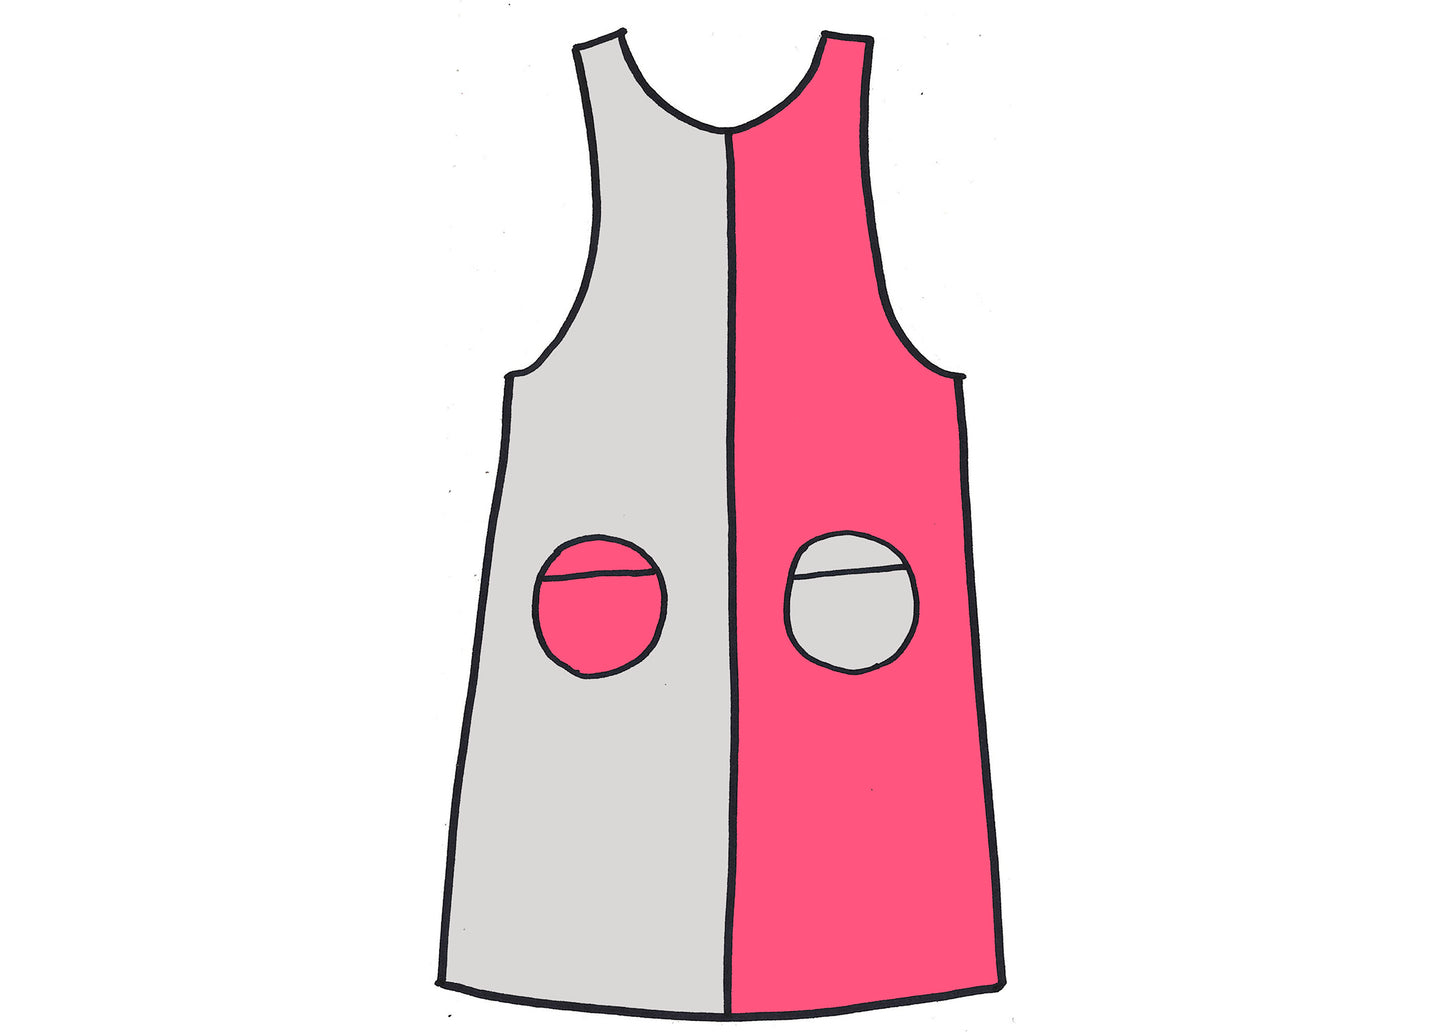 Holis Corduroy Jumper in Pewter & Pink (Made to Order)